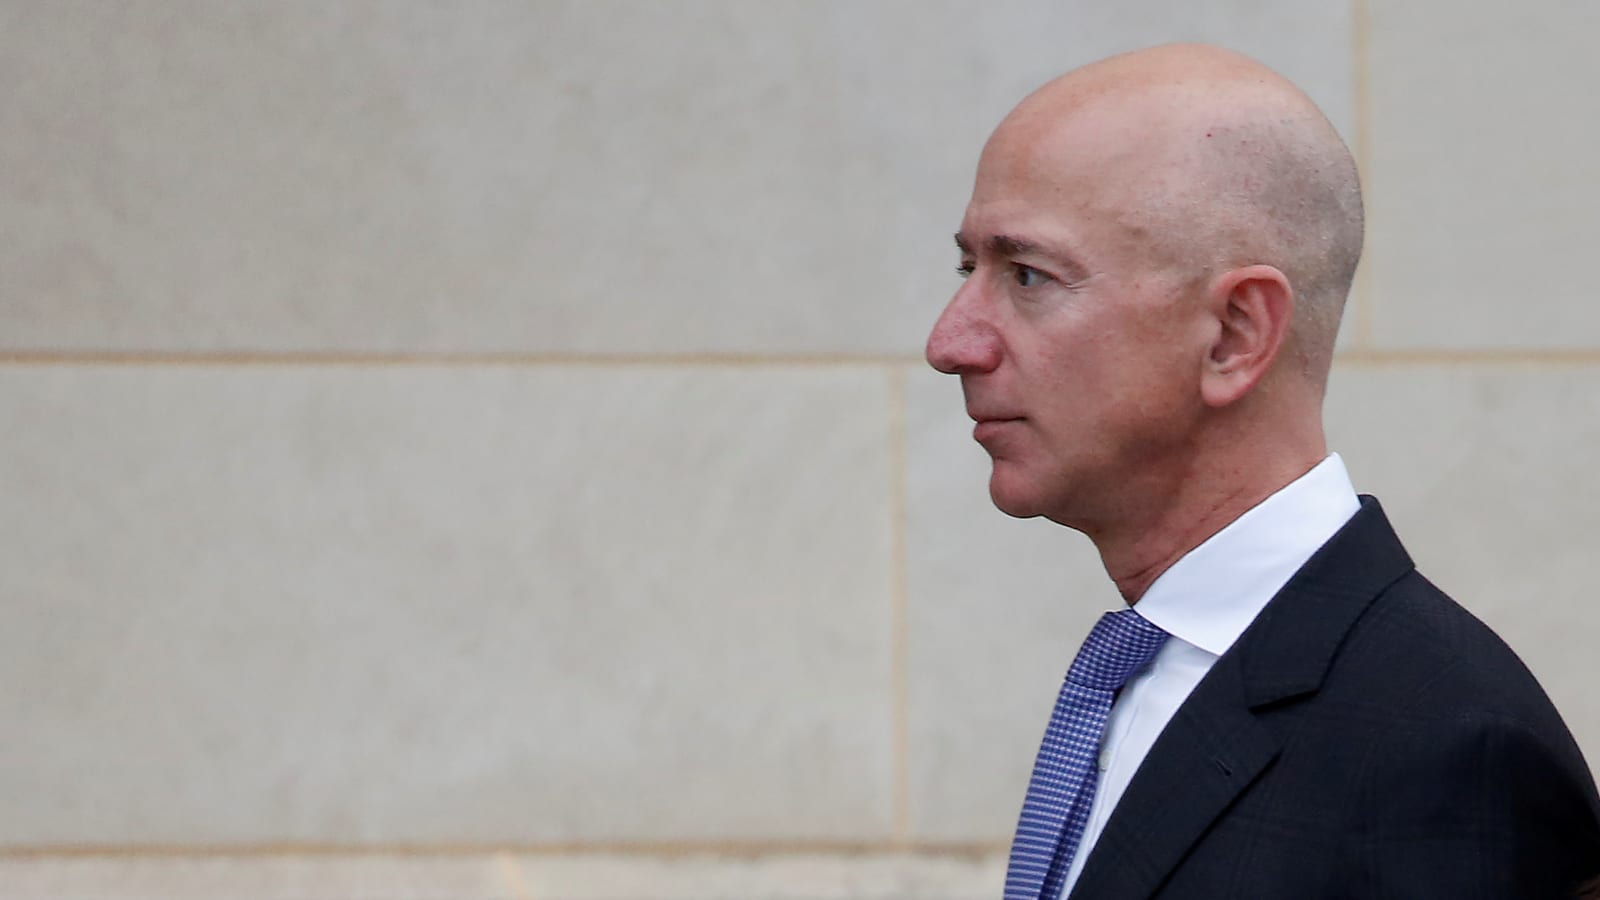 Amazon's Jeff Bezos is spending billions on original content